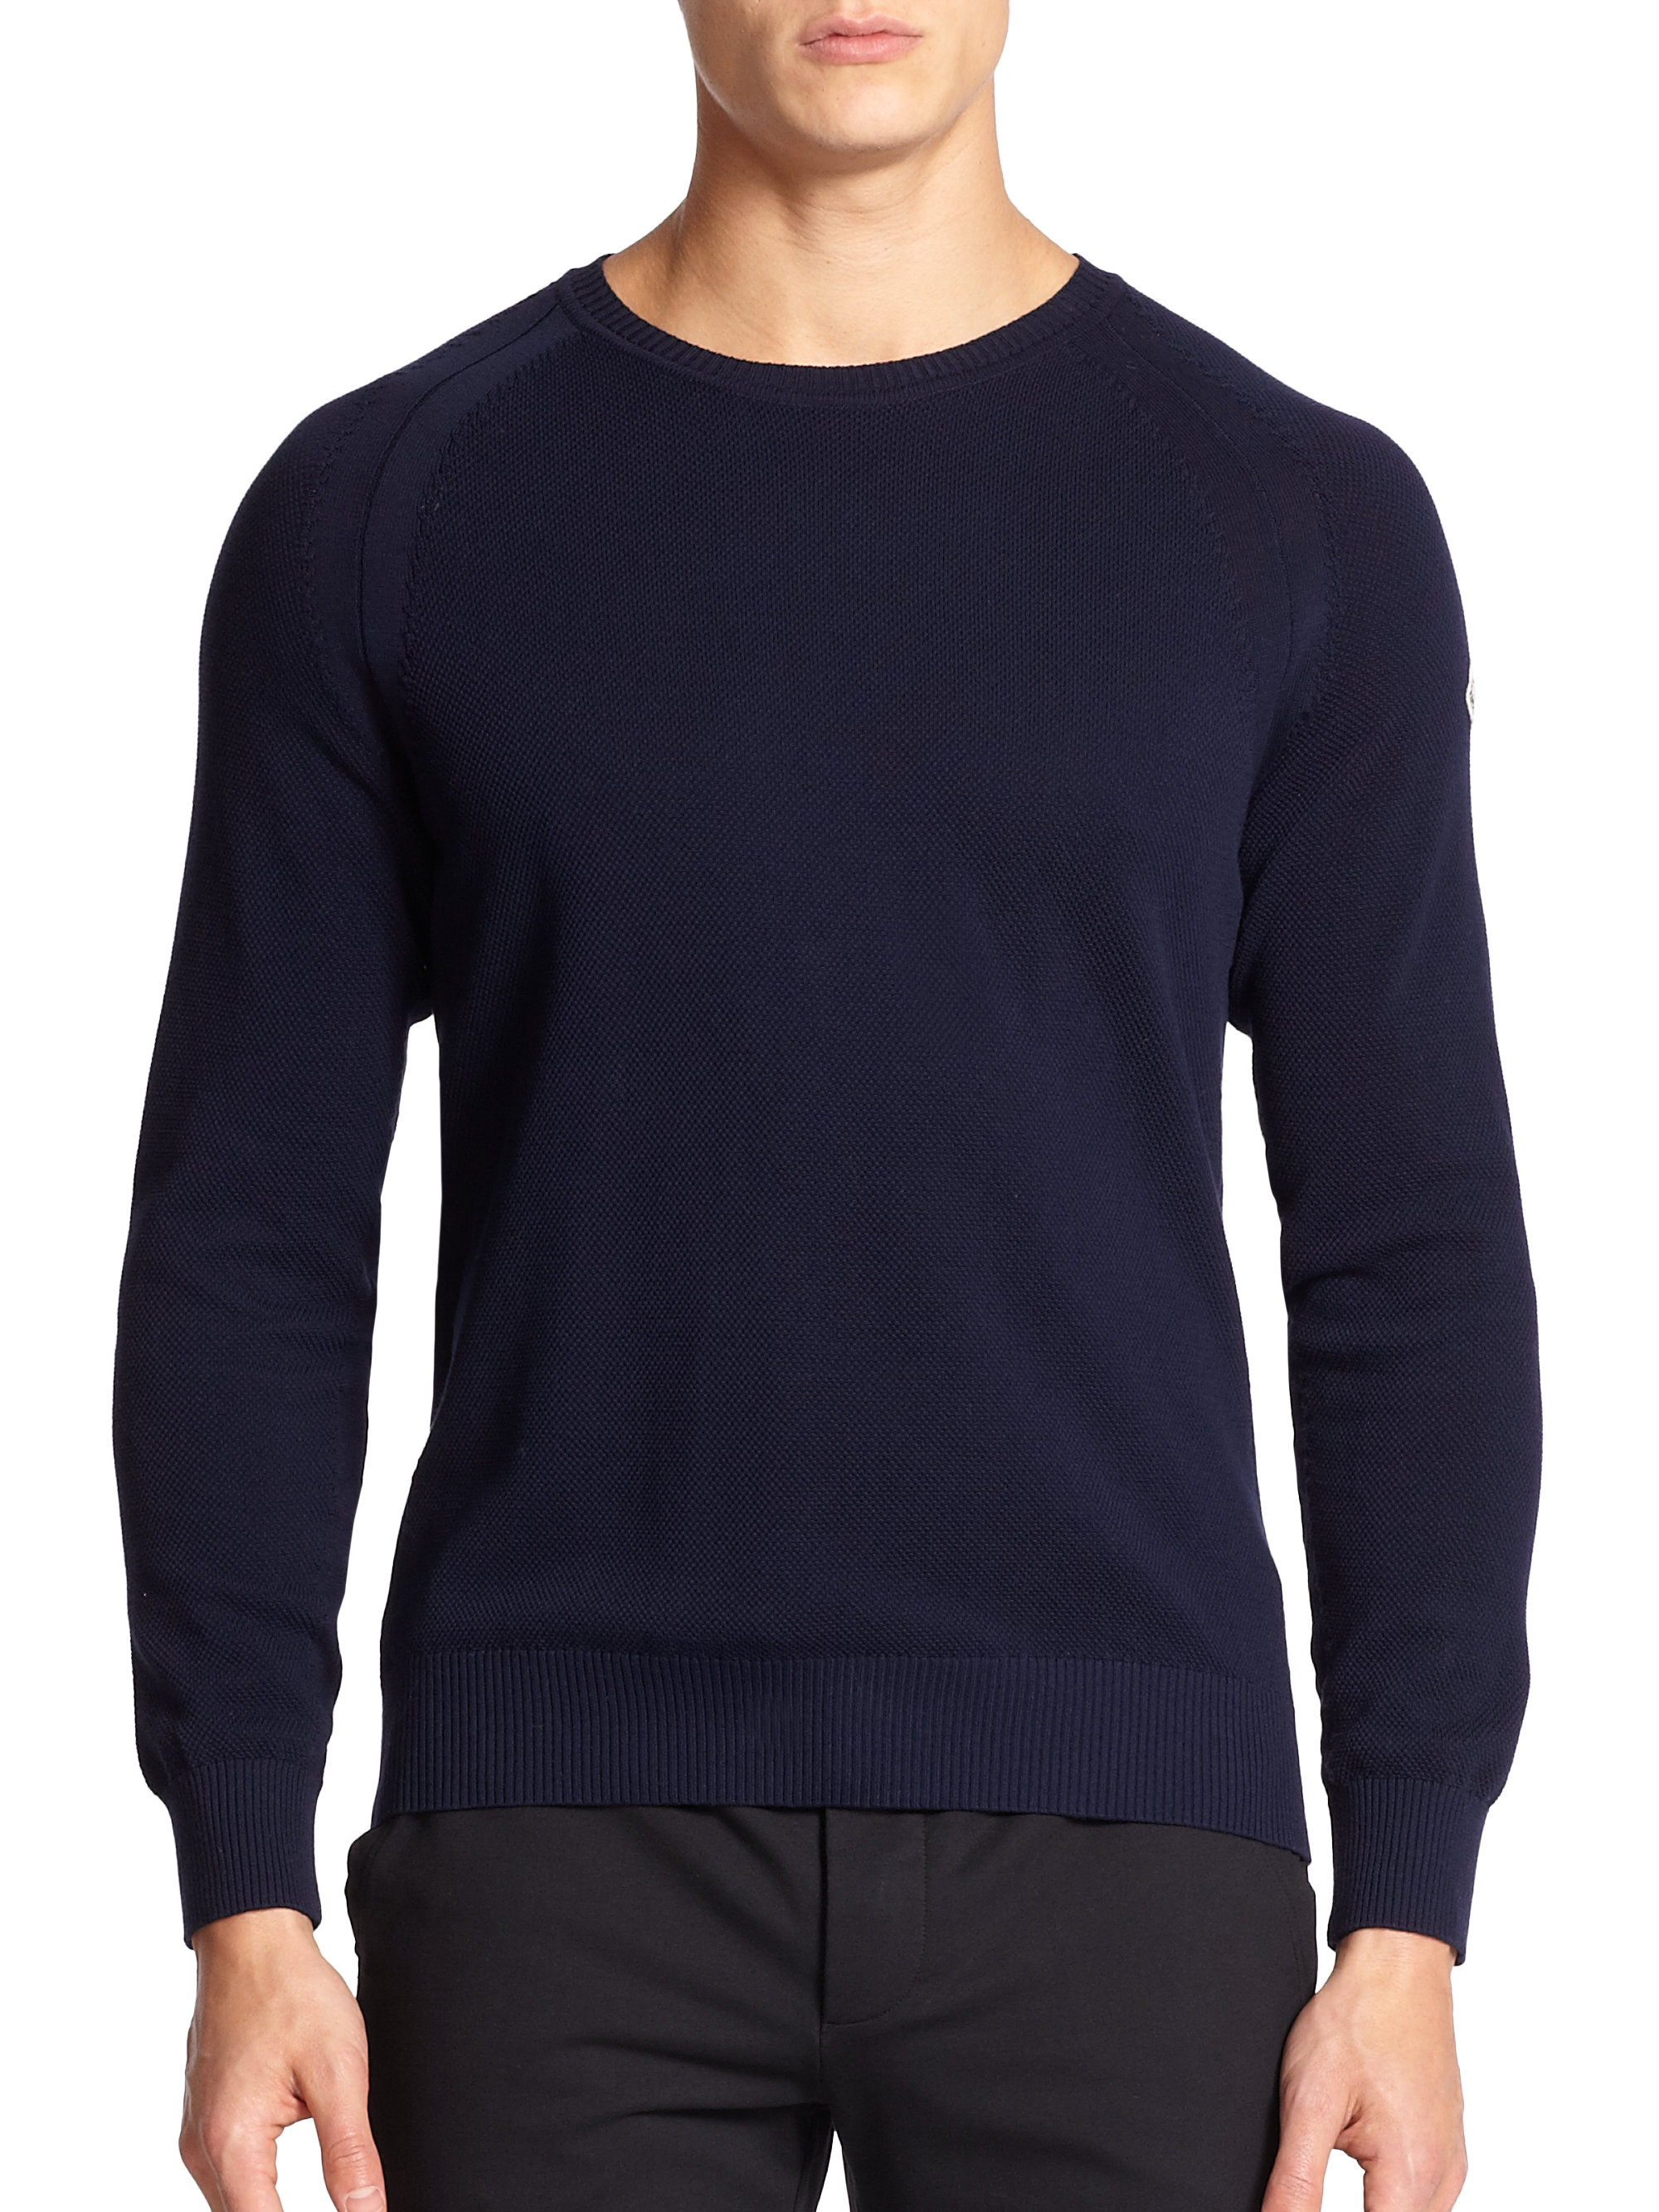 Lyst - Moncler Raglan-sleeve Crewneck Sweater in Blue for Men